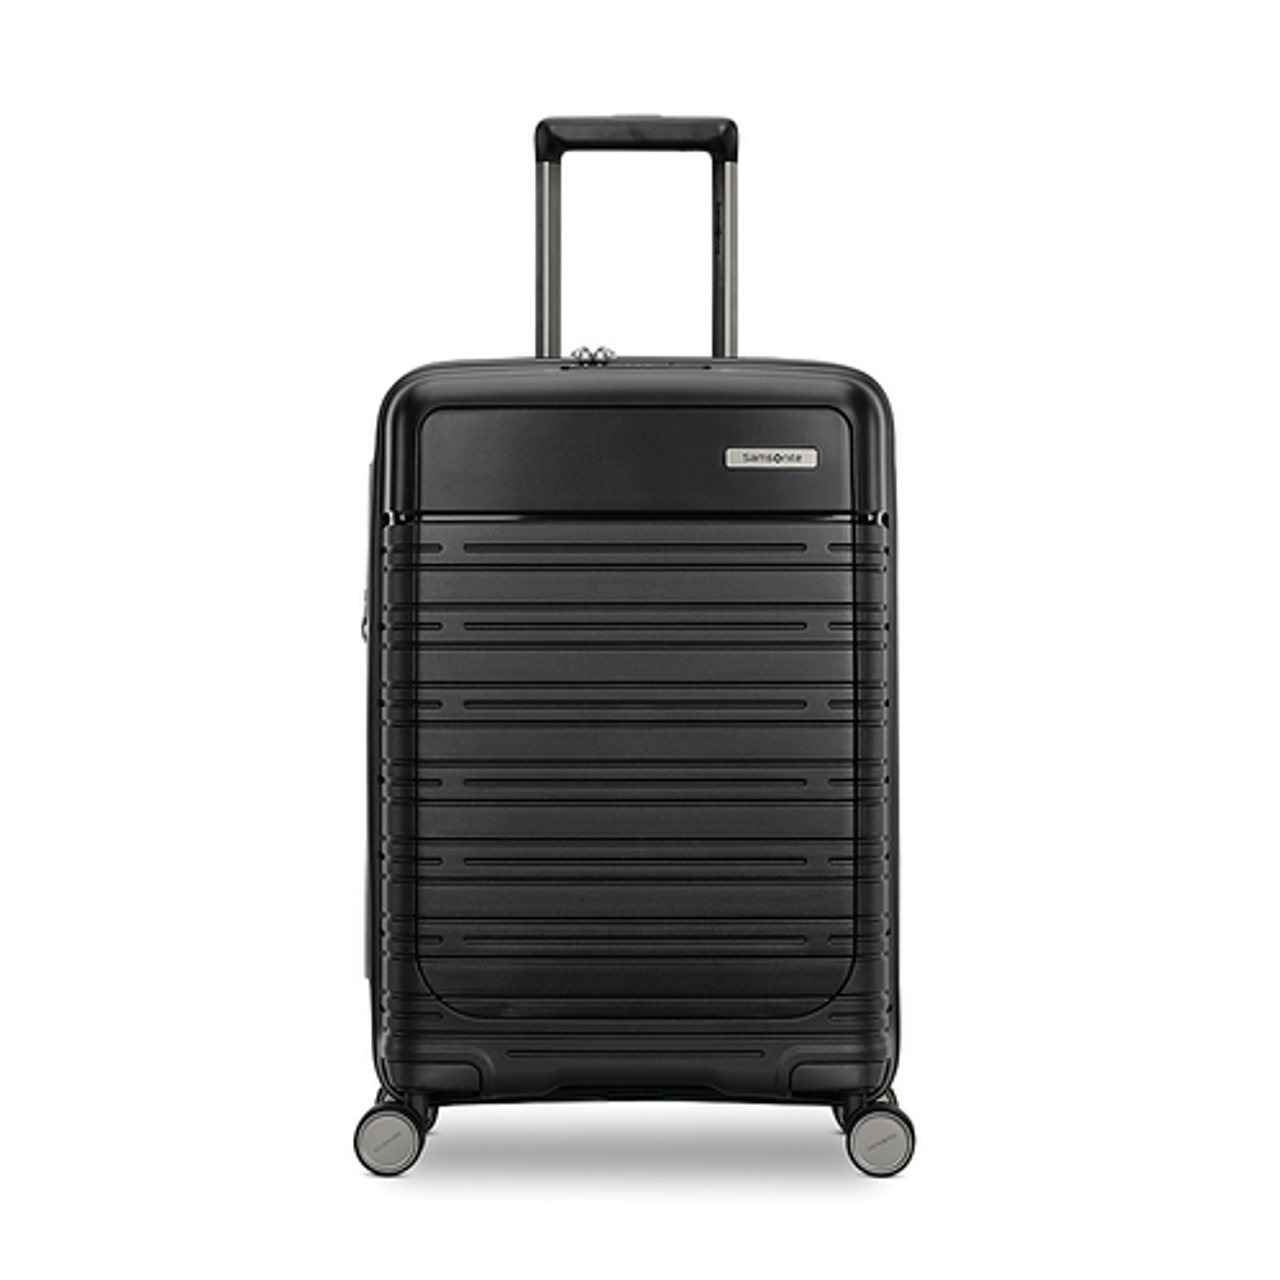 Samsonite - Elevation Plus 21" Expandable Carry-On Spinner Suitcase - Triple Black